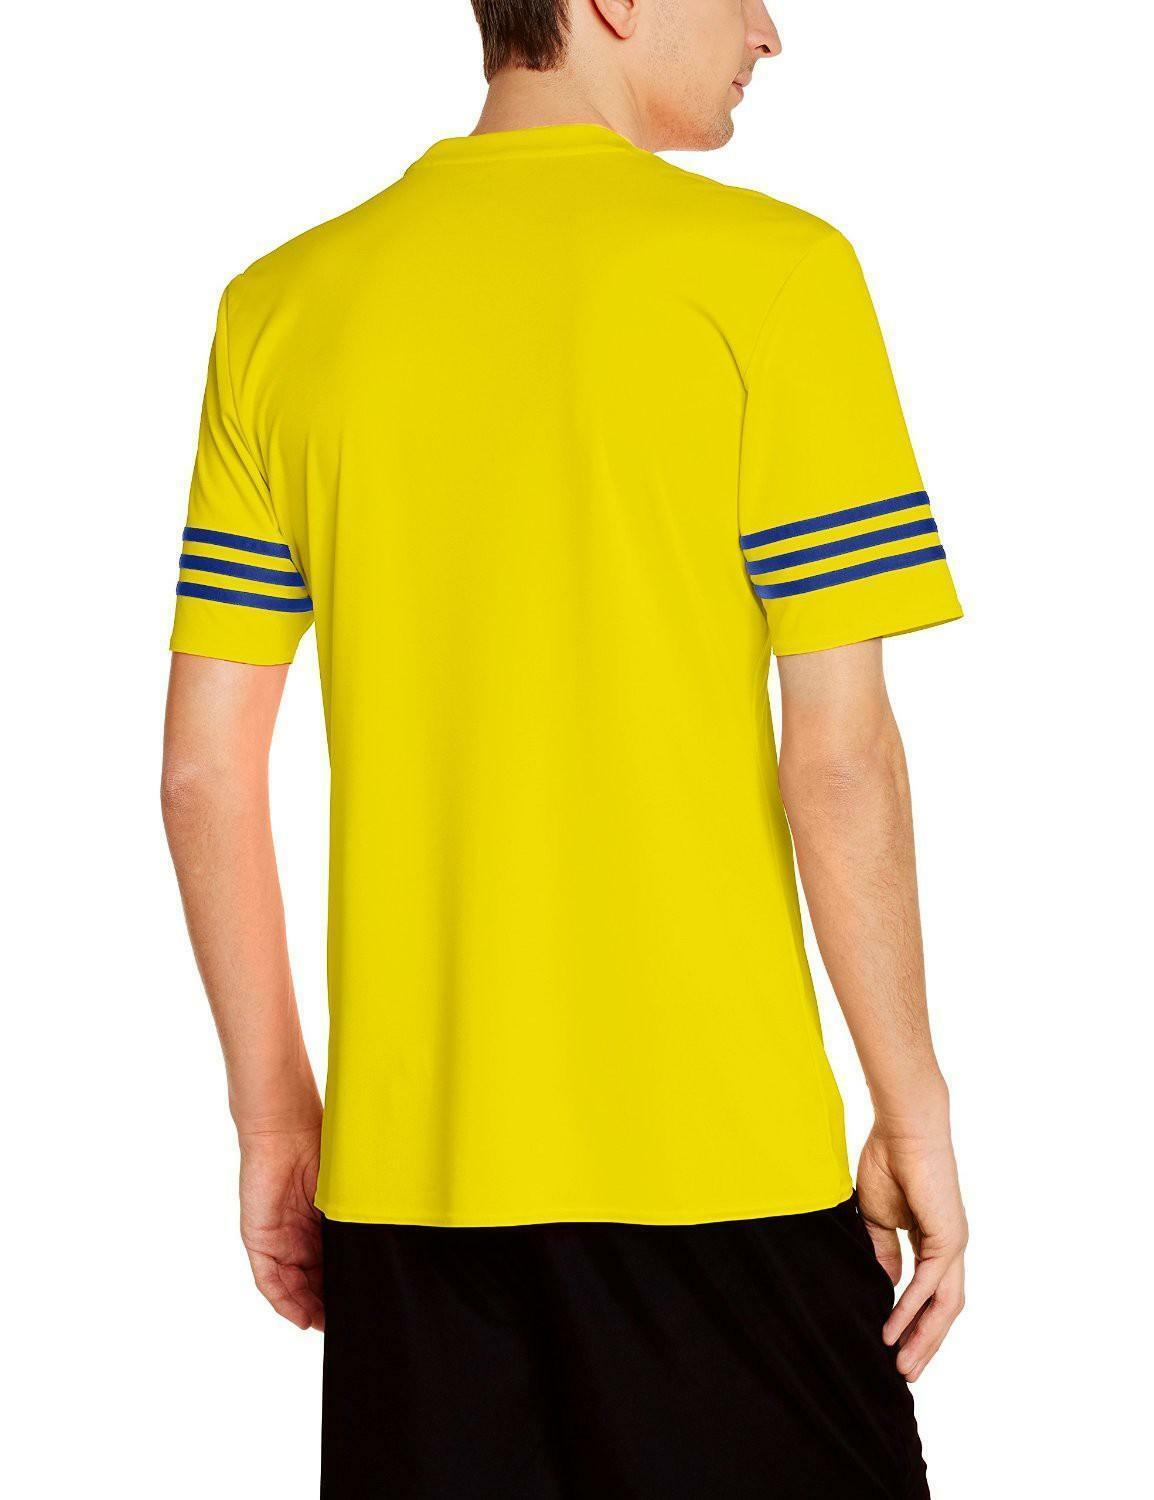 adidas adidas t-shirt entrada 14 jsy climalite uomo gialla poliestere f50489